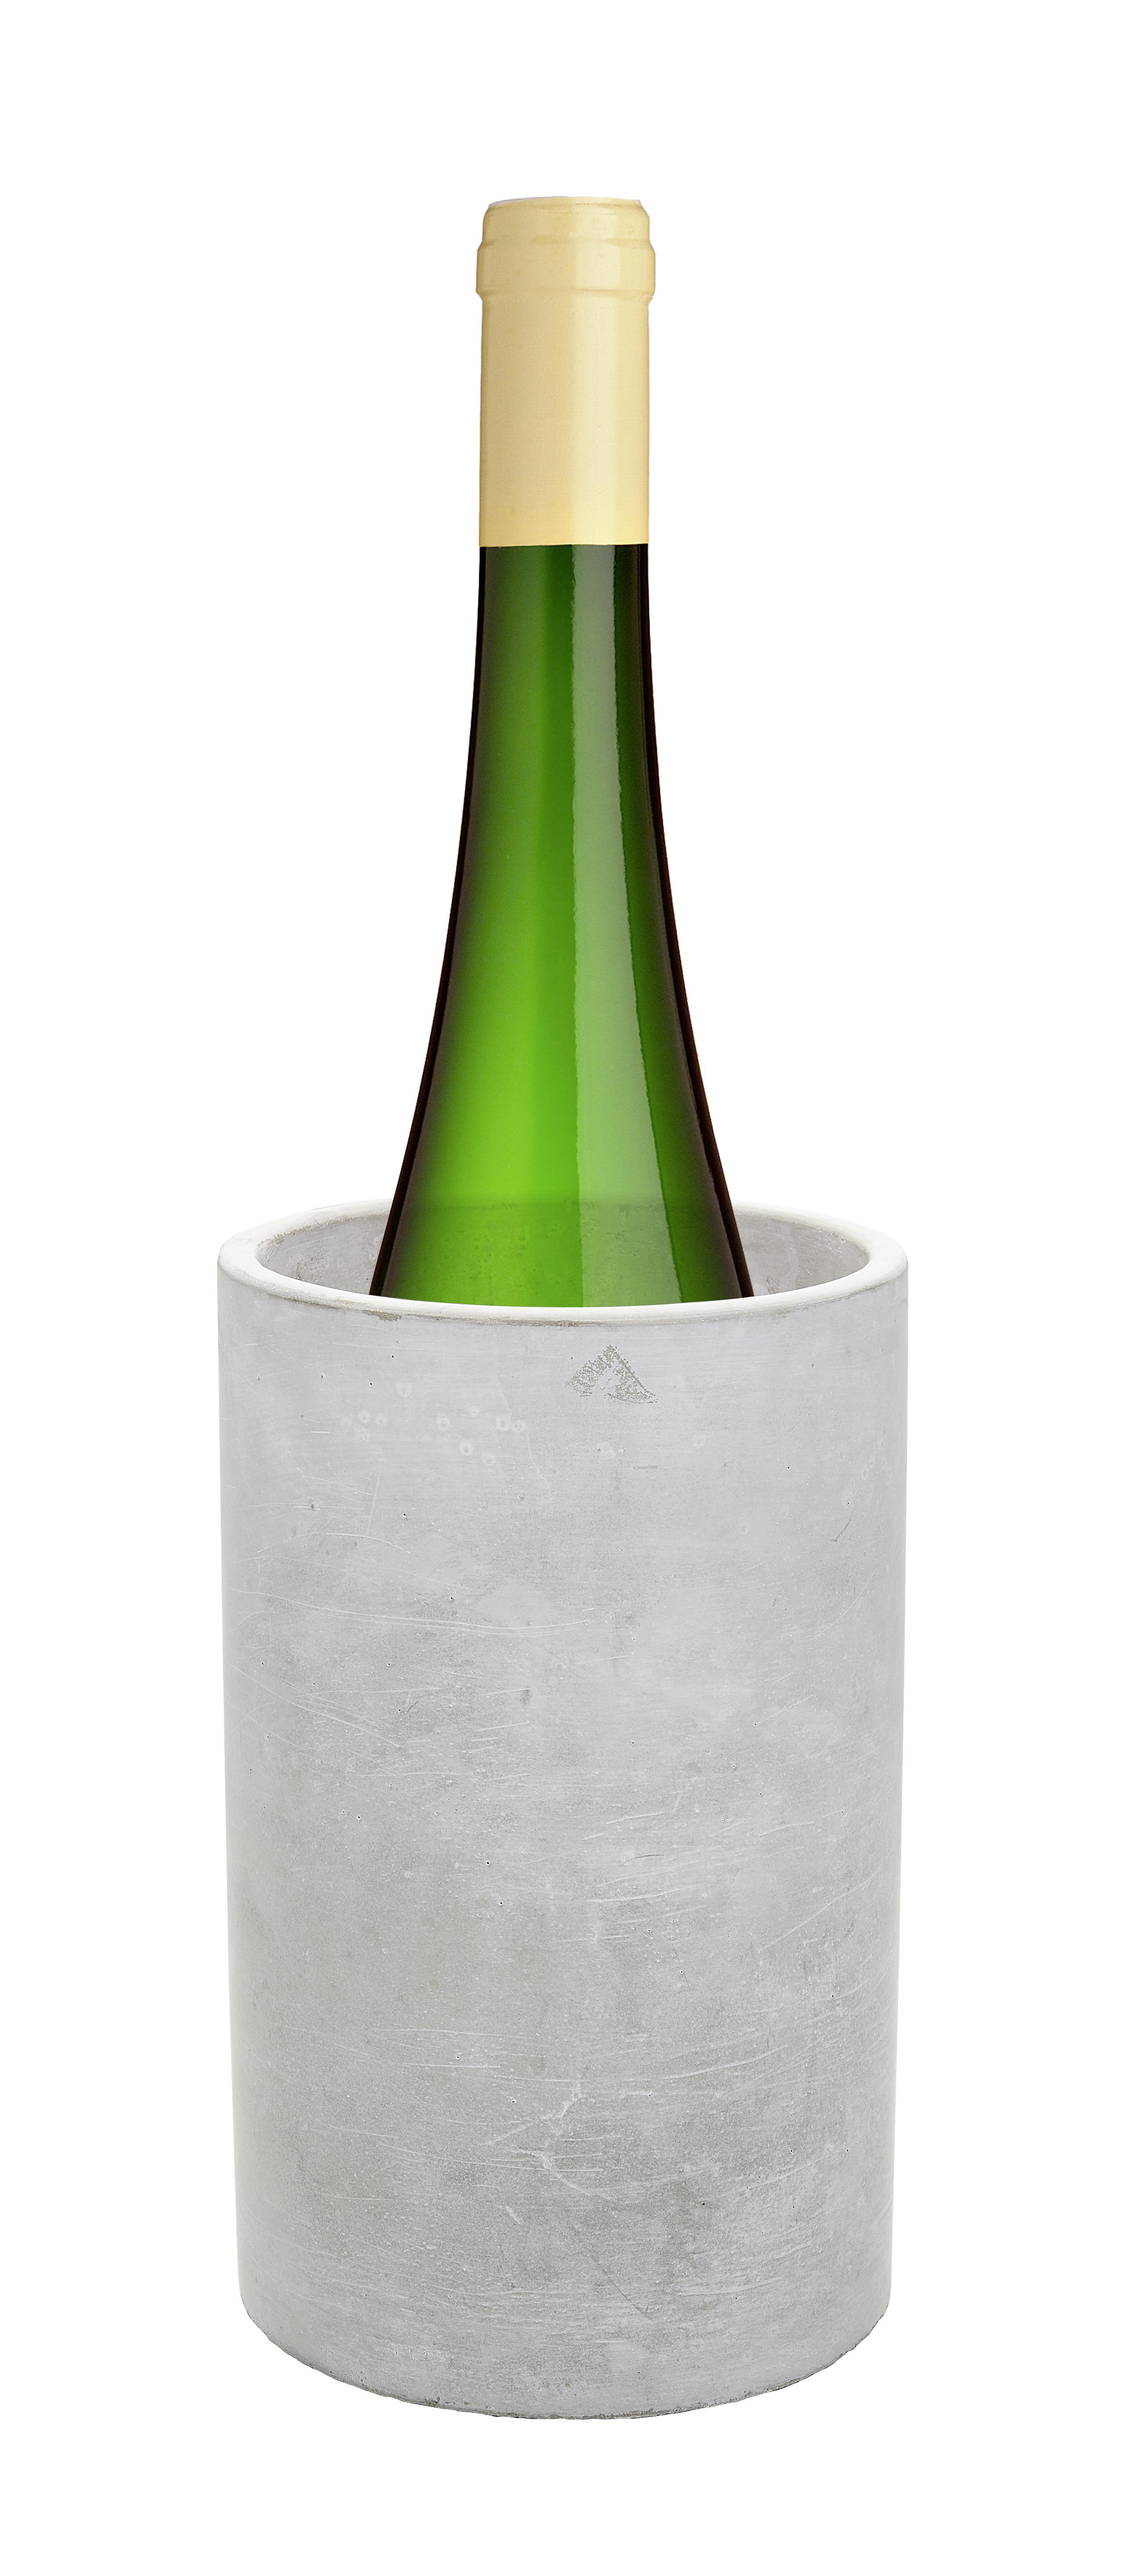 Chladič Na Víno Oil Green - šedá, Moderní, kámen (13,5/21,5cm) - Premium Living